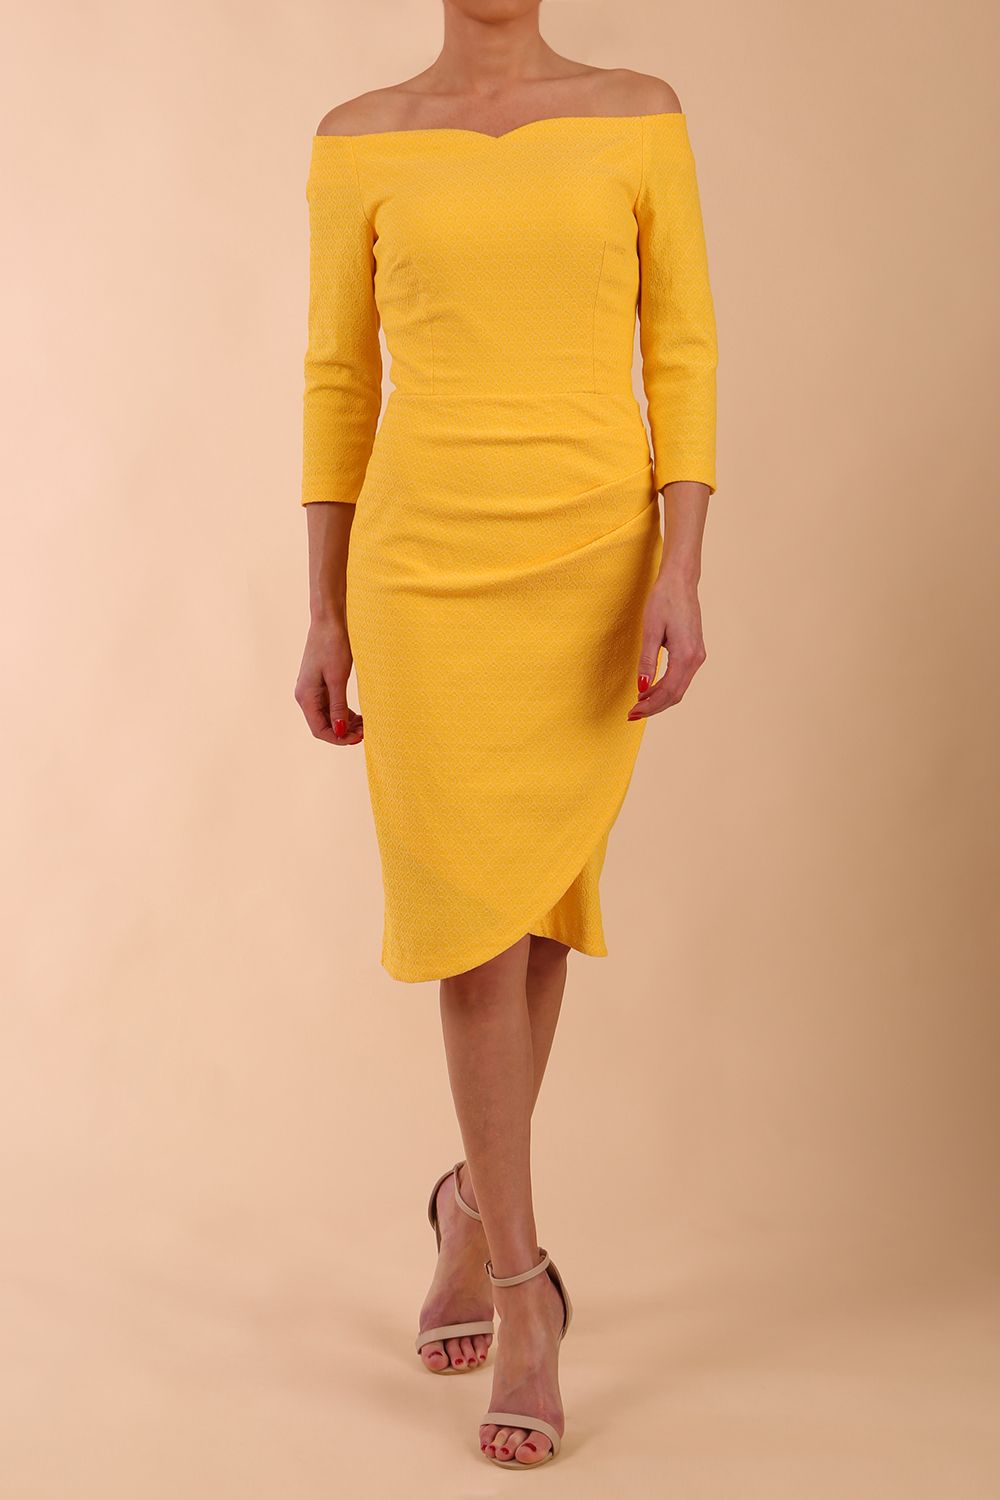 Model wearing diva catwalk Trixie dress in Sunrise Yellow front